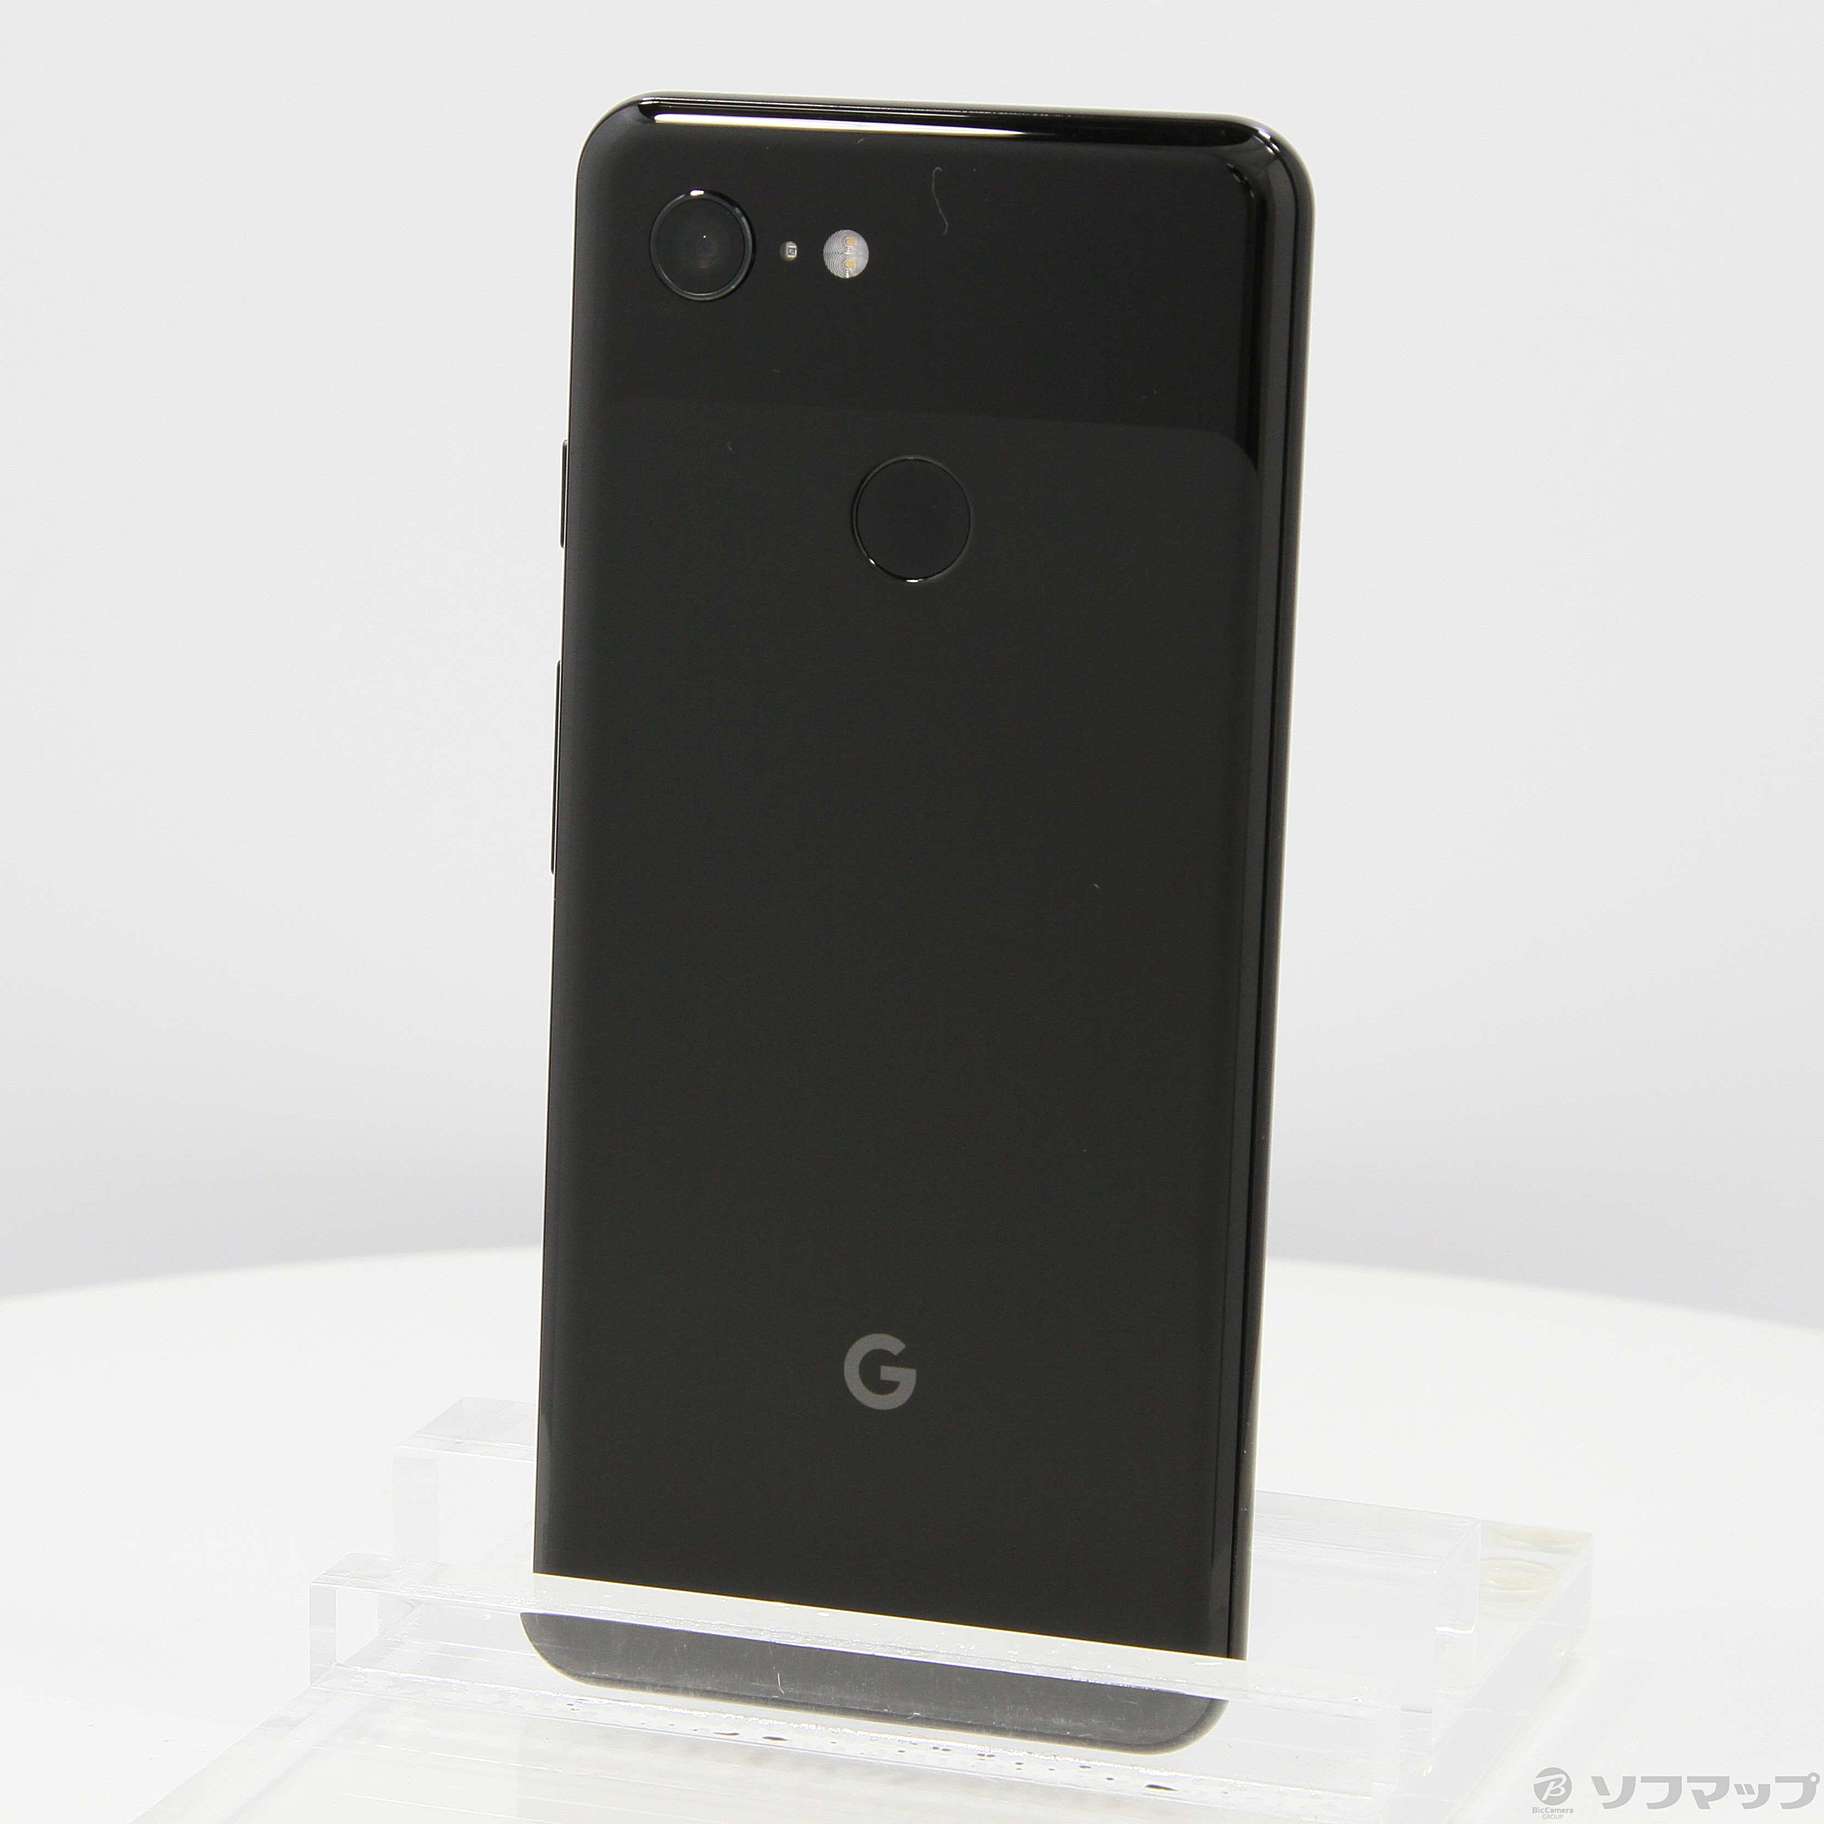 Google pixel 3 64gb